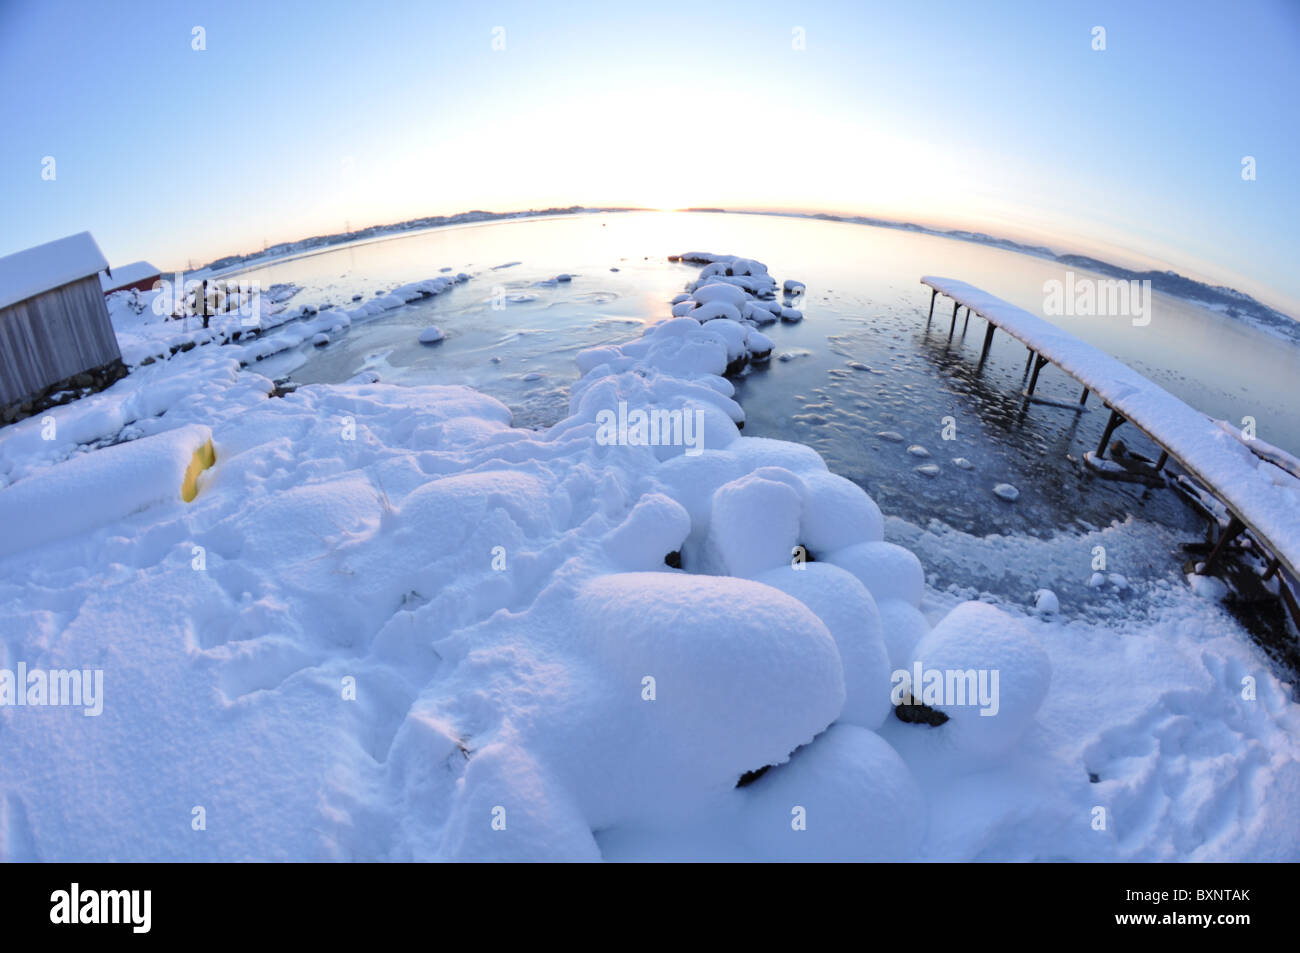 Winter landscape by the sea seen through a fisheye lense. snow, sea, pier Stock Photo